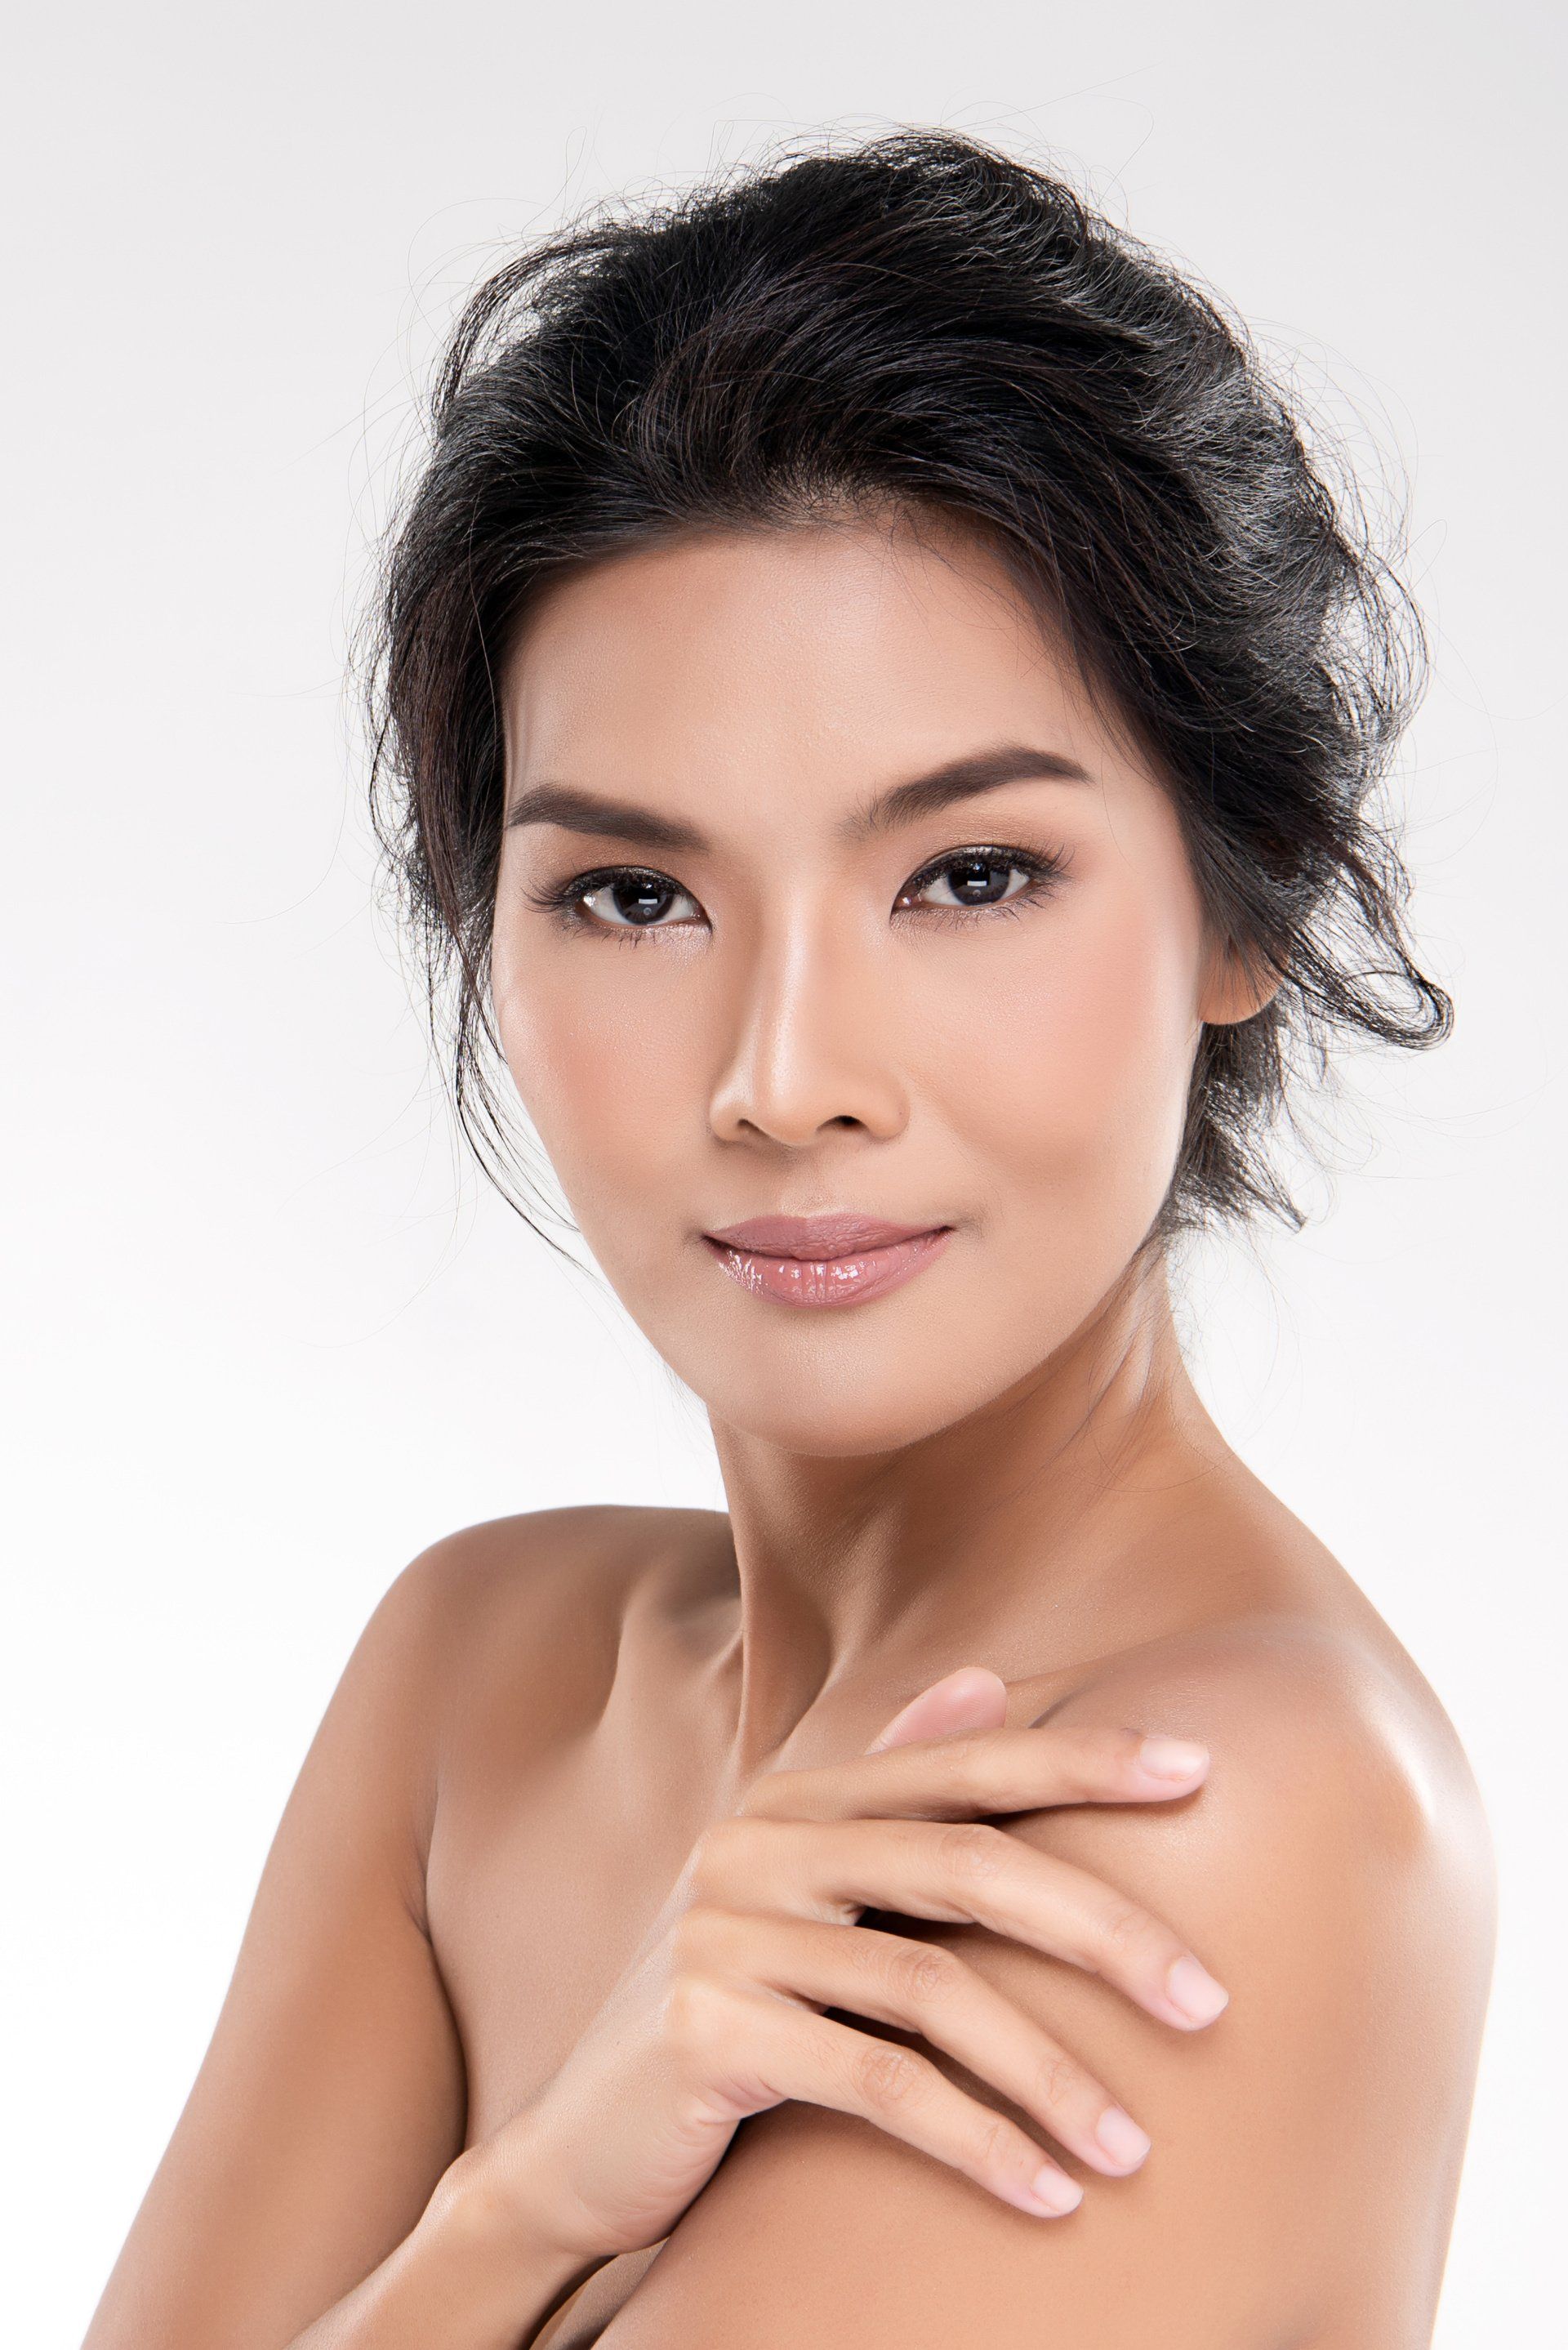 beautiful asian woman in her 30s with glowing skin